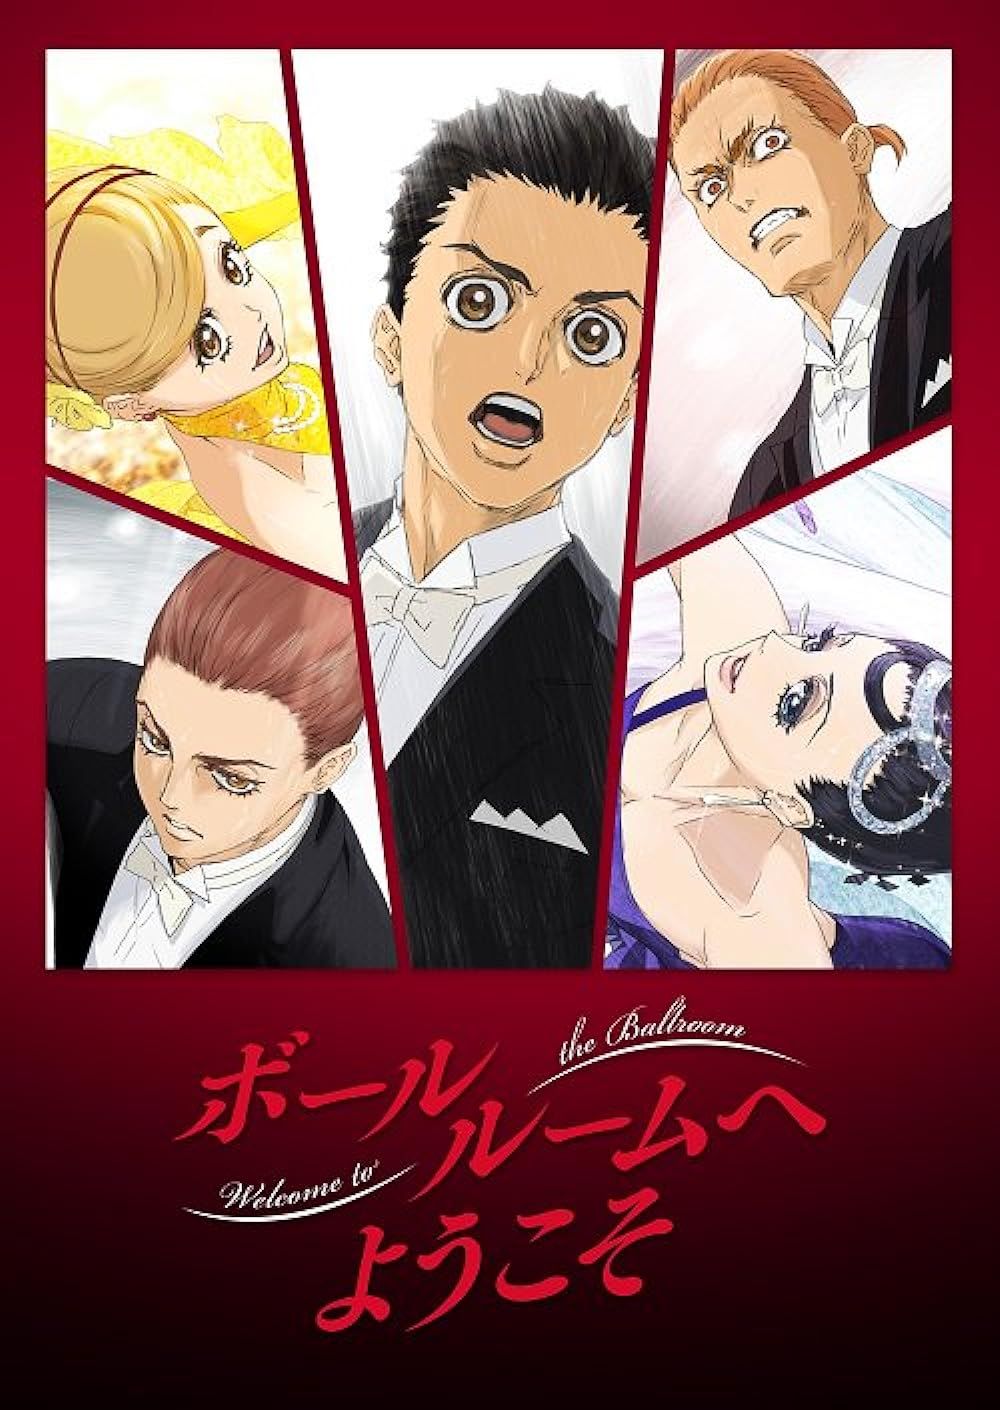 Welcome To The Ballroom anime poster